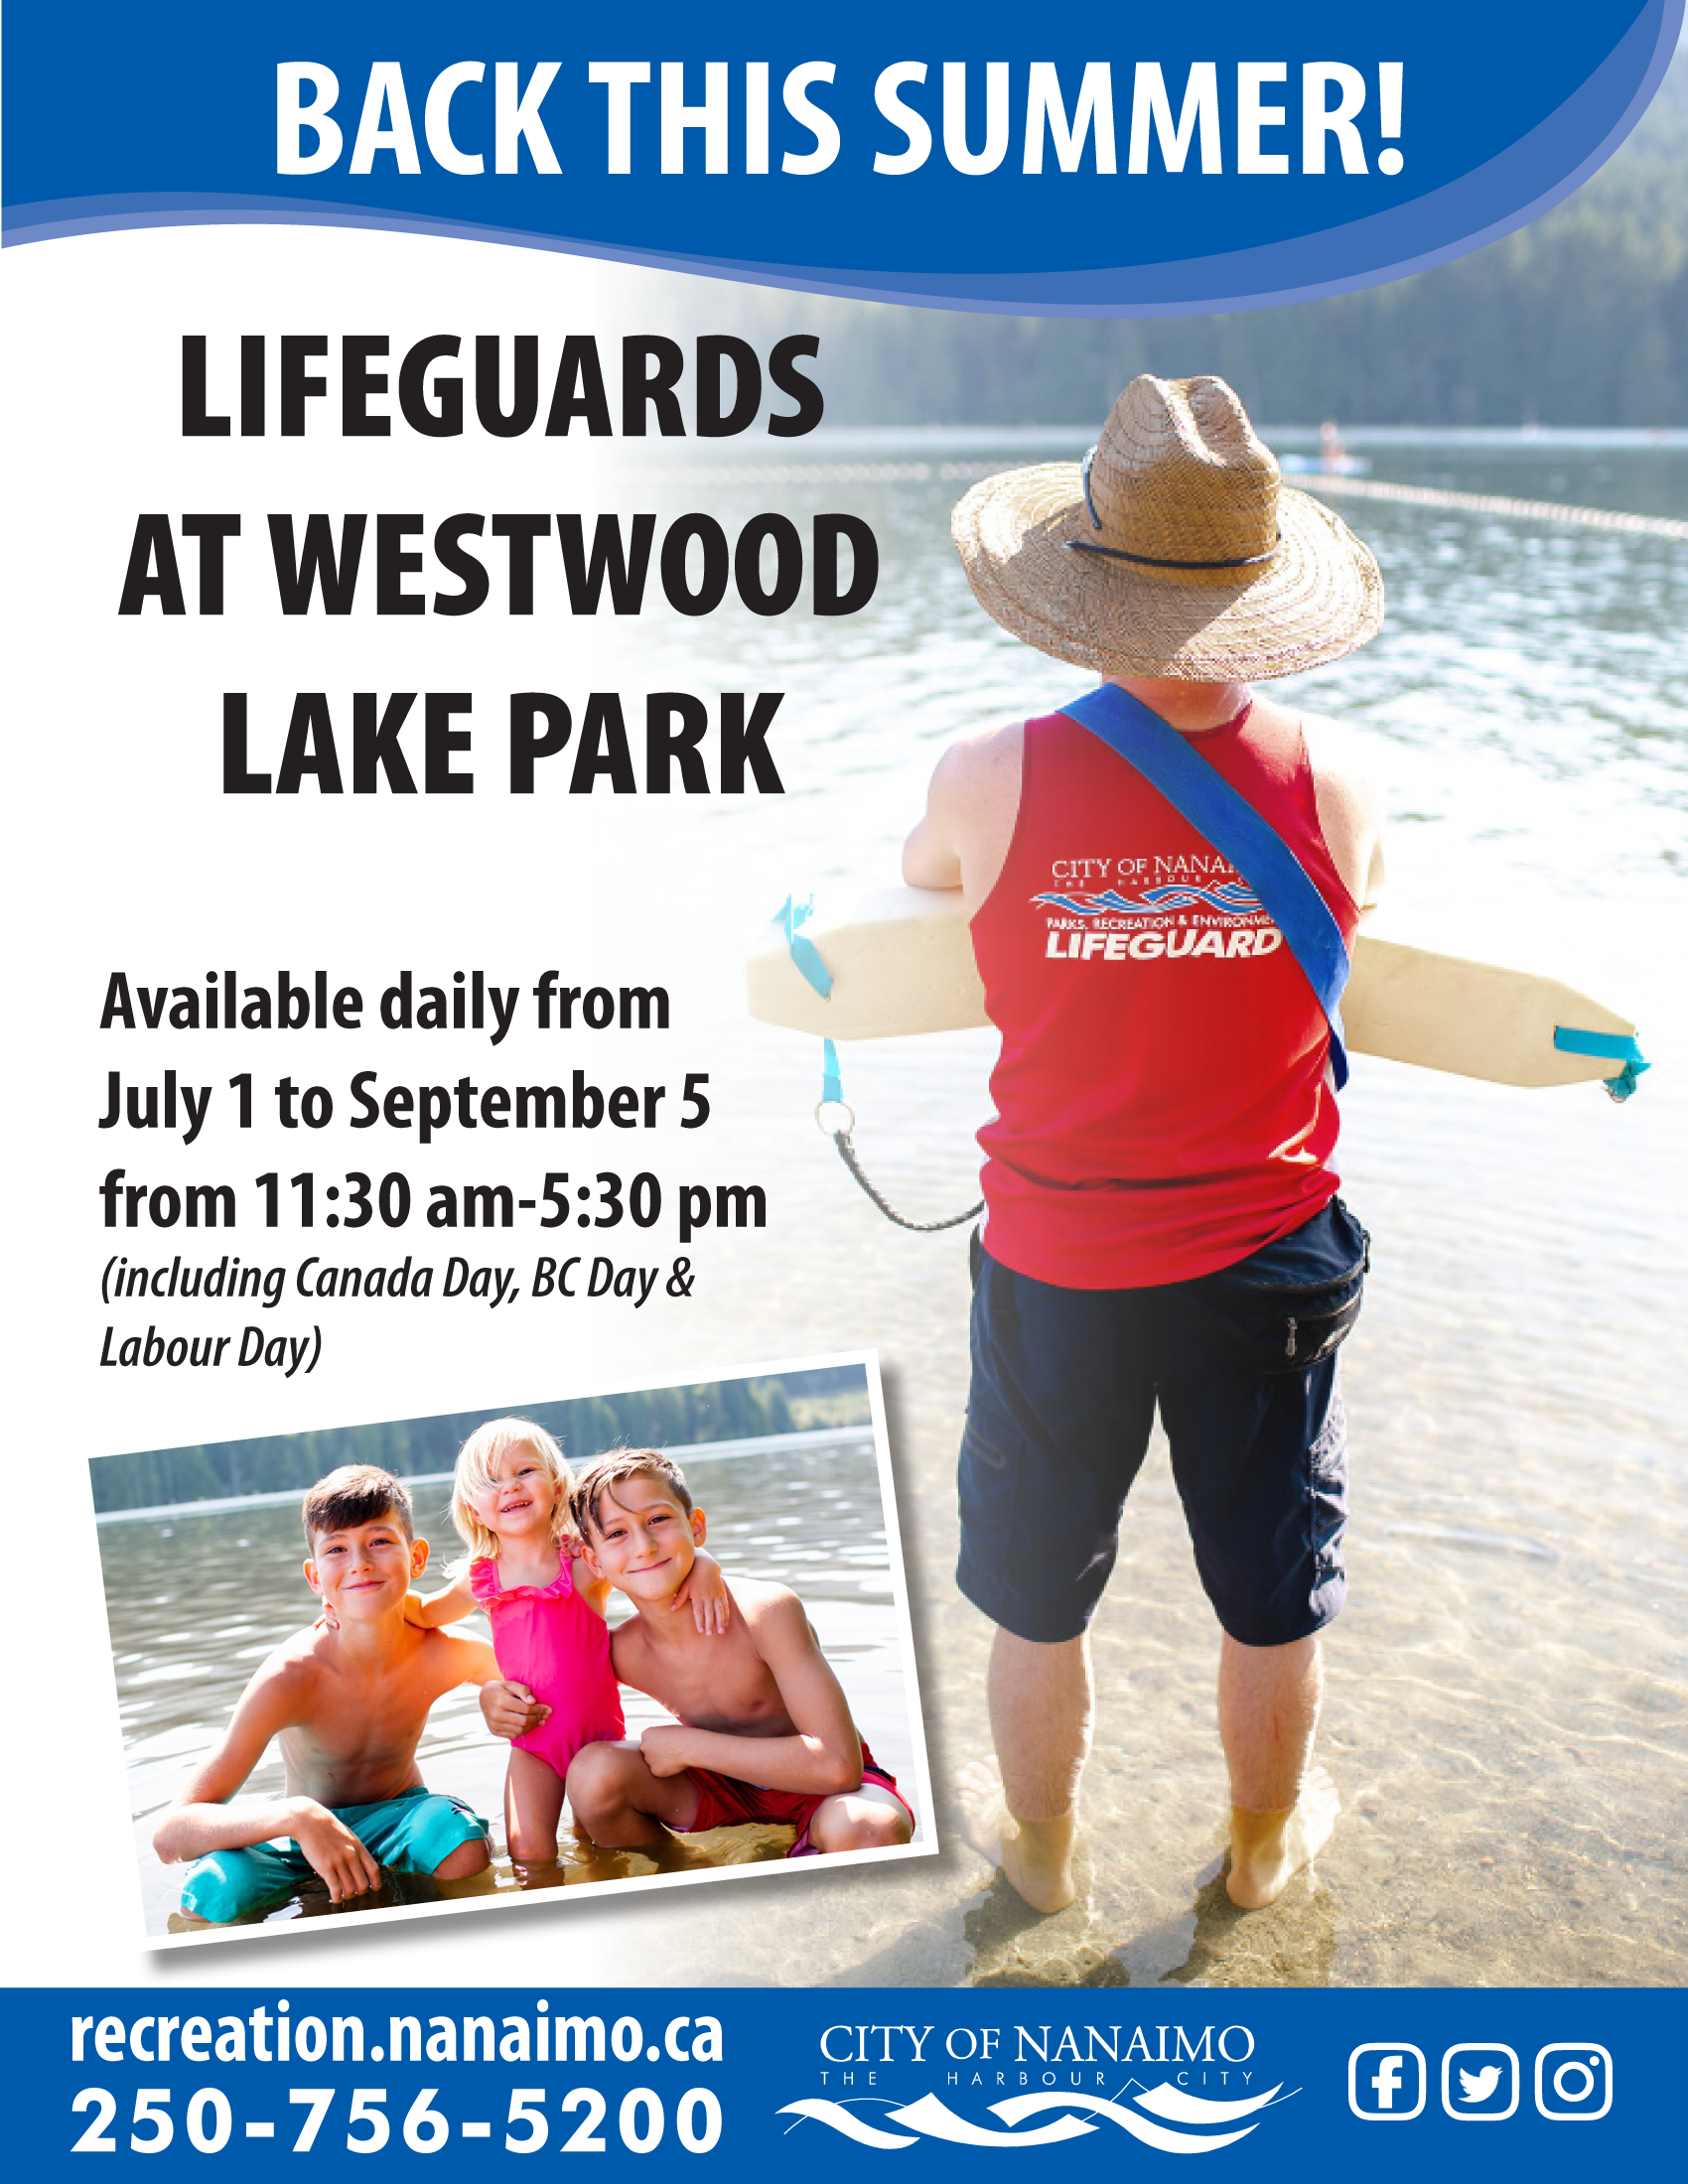 Lifeguards at Westwood Lake Park